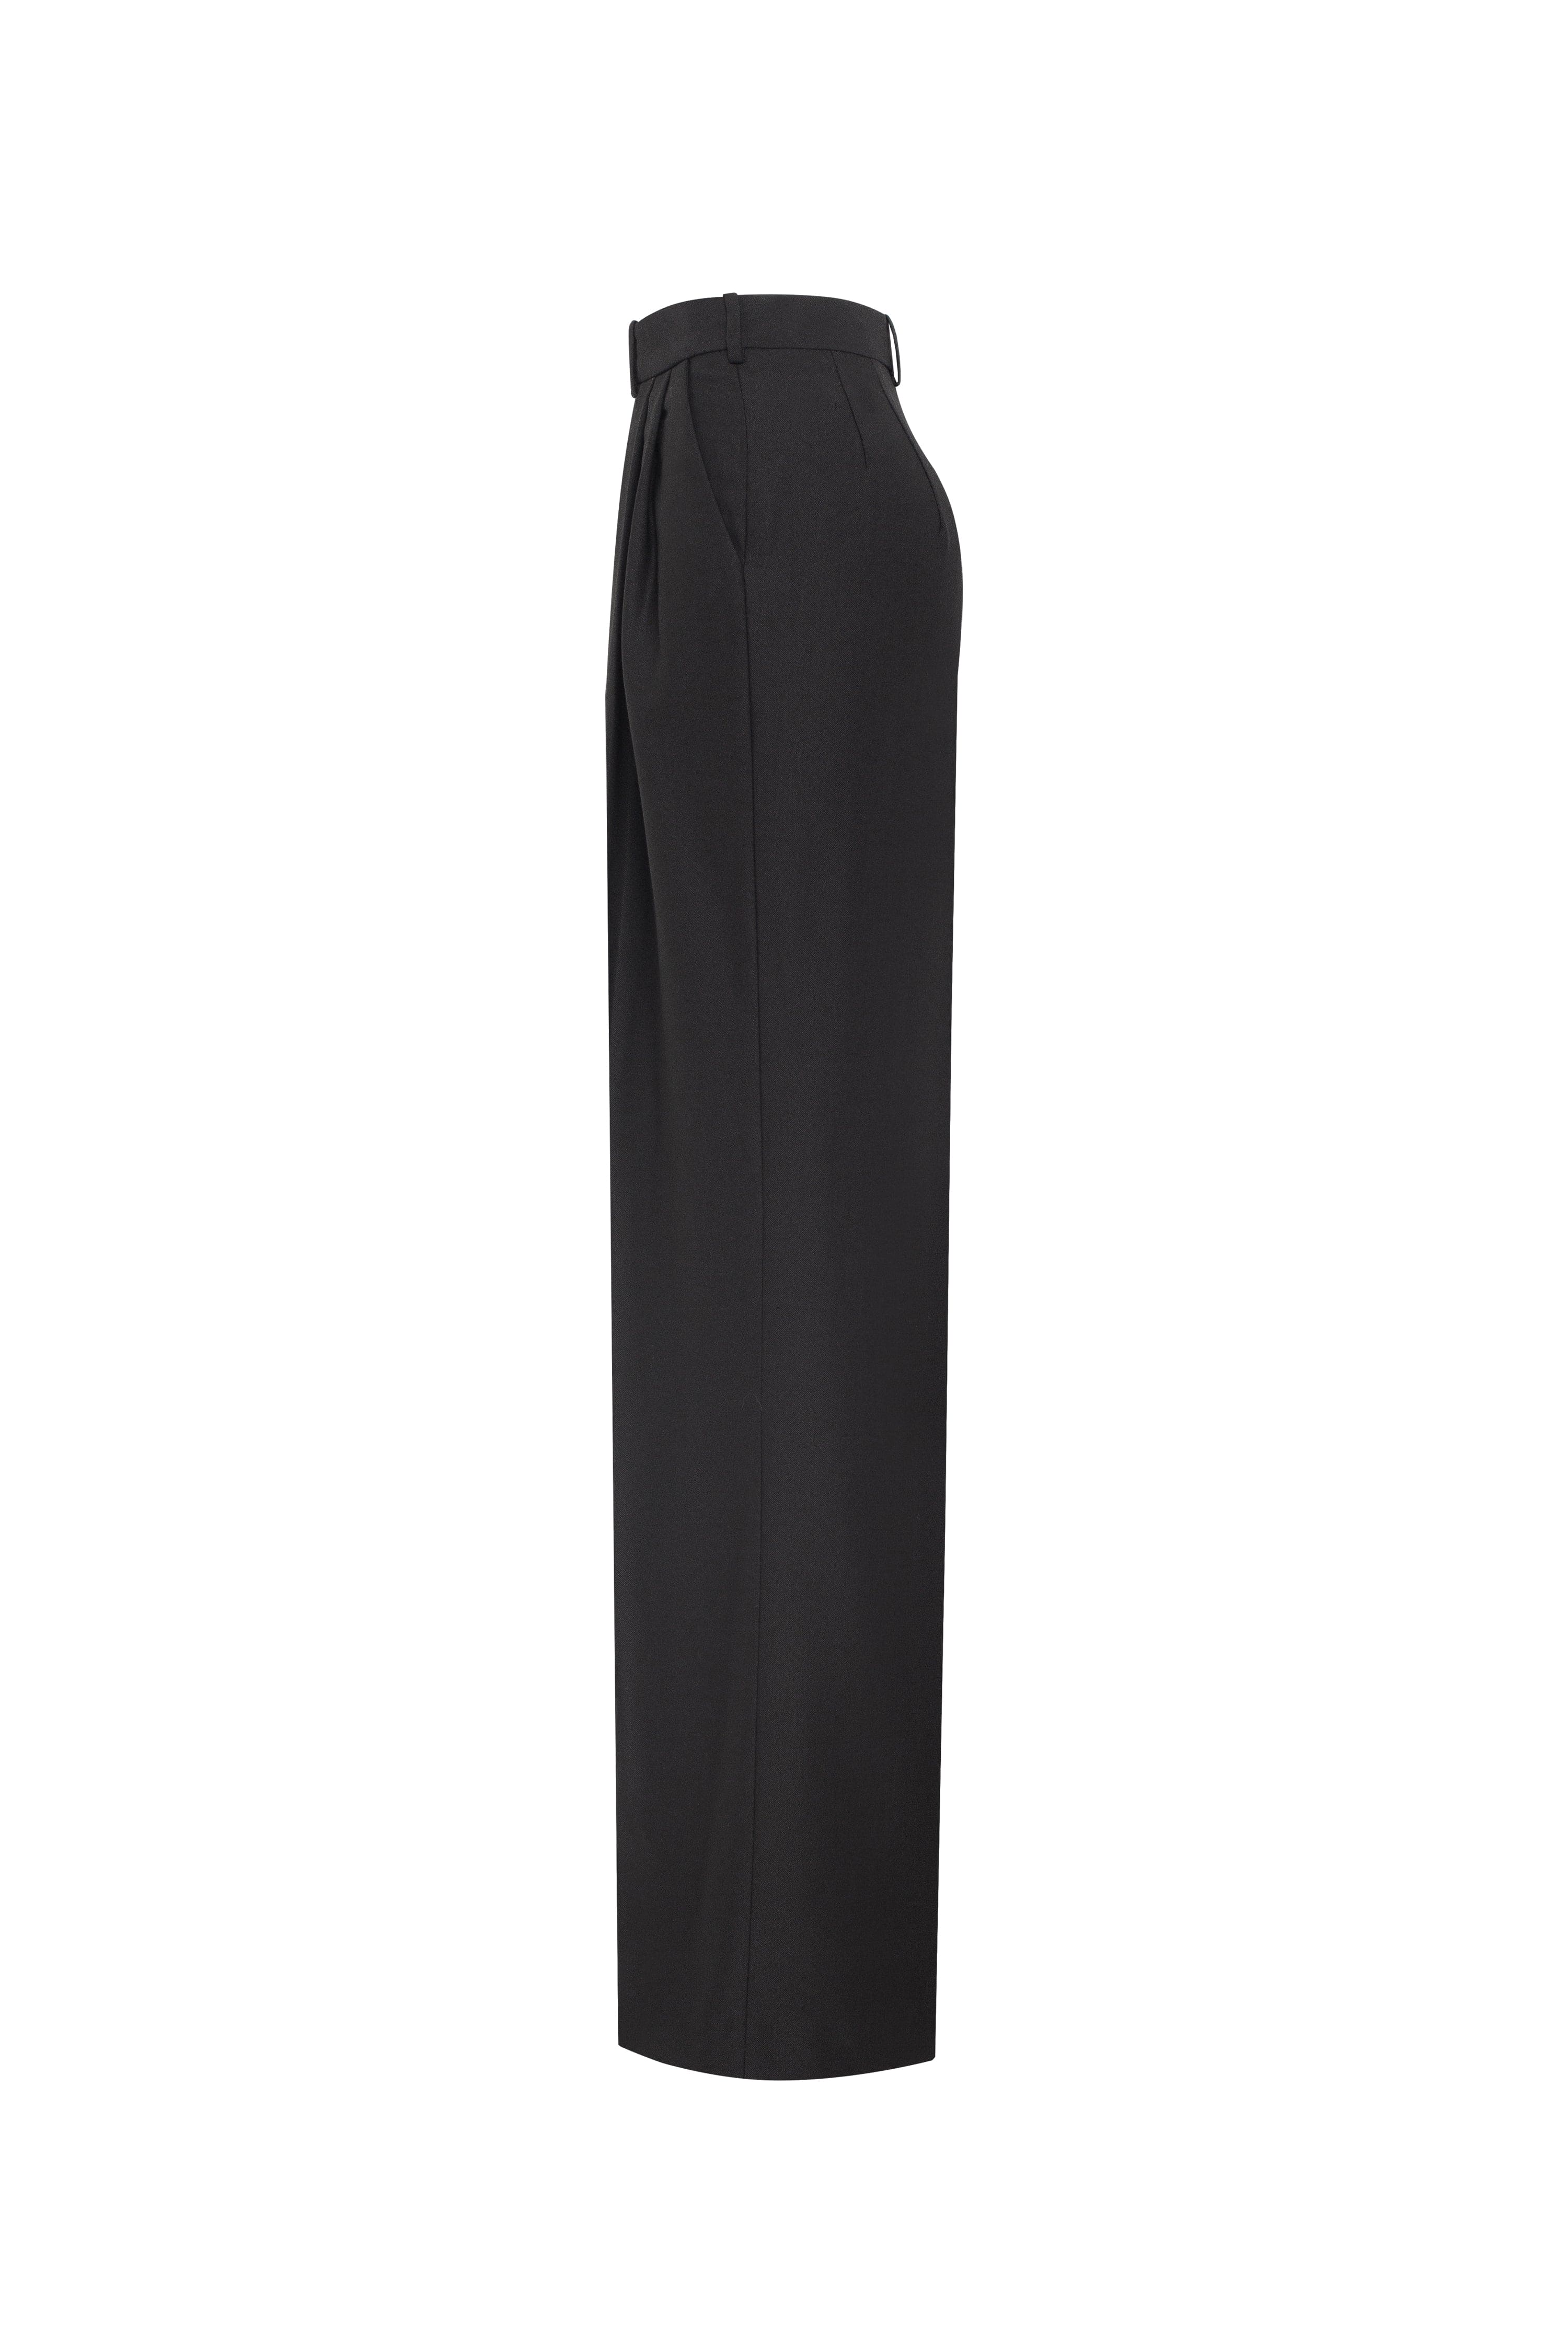 Refined black pants cut from Italian satin, Xo Xo Milla Dresses - USA ...